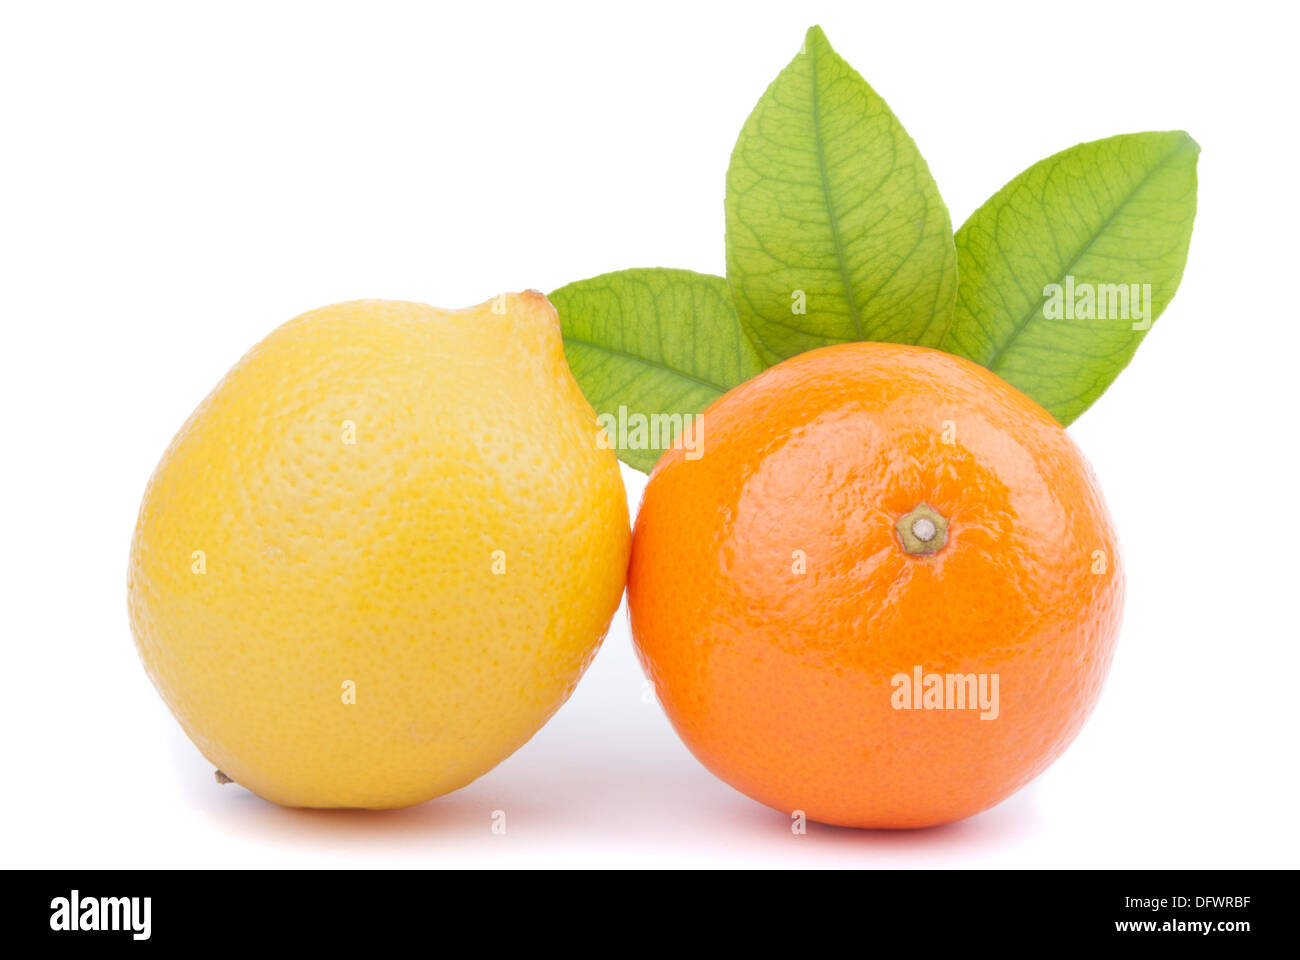 Tangerine and lemon on a white background. Stock Photo